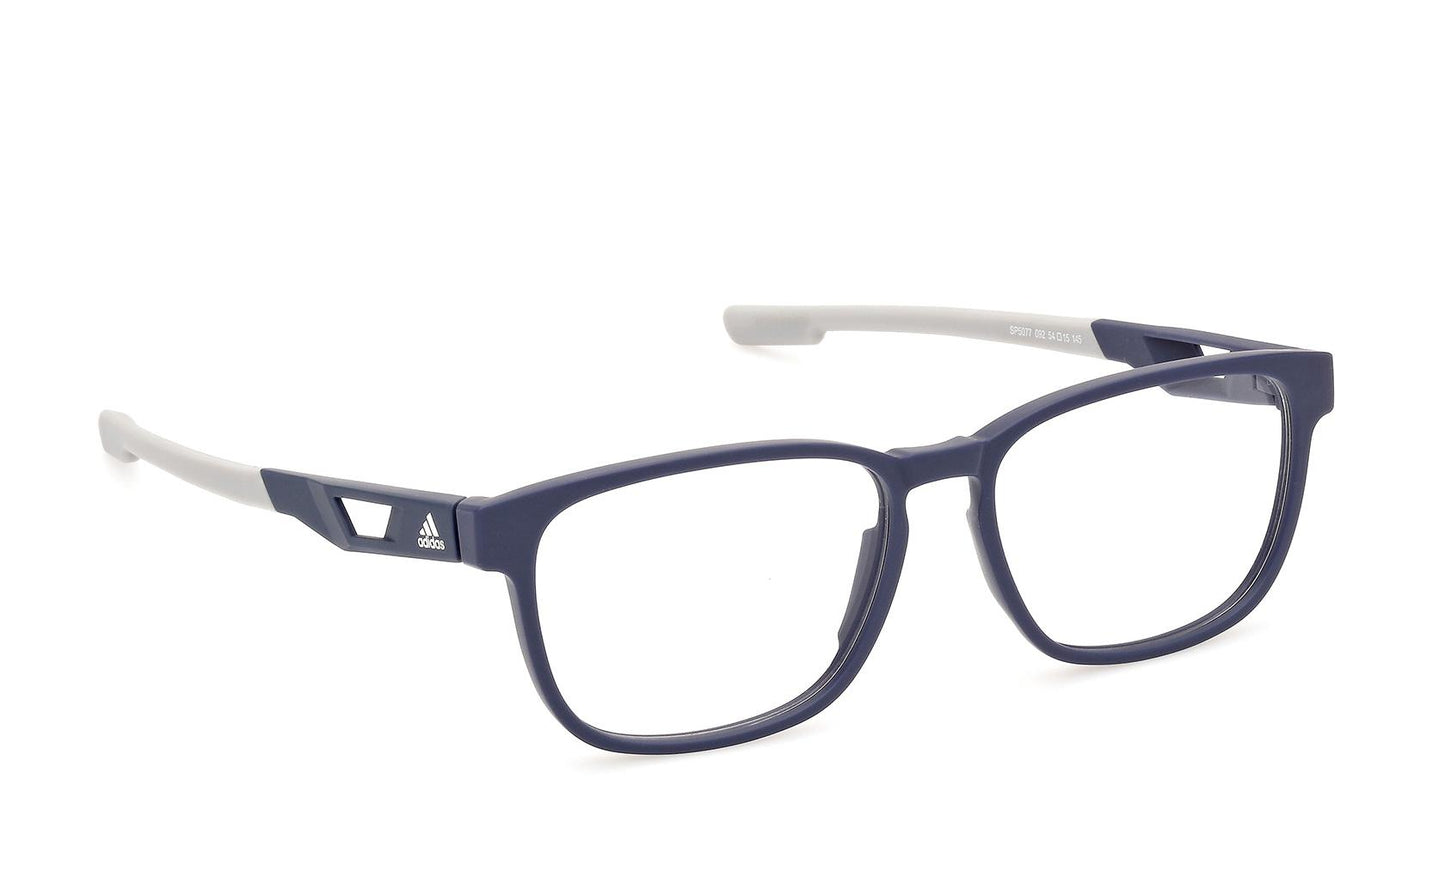 Adidas Sport Eyeglasses SP5077 092